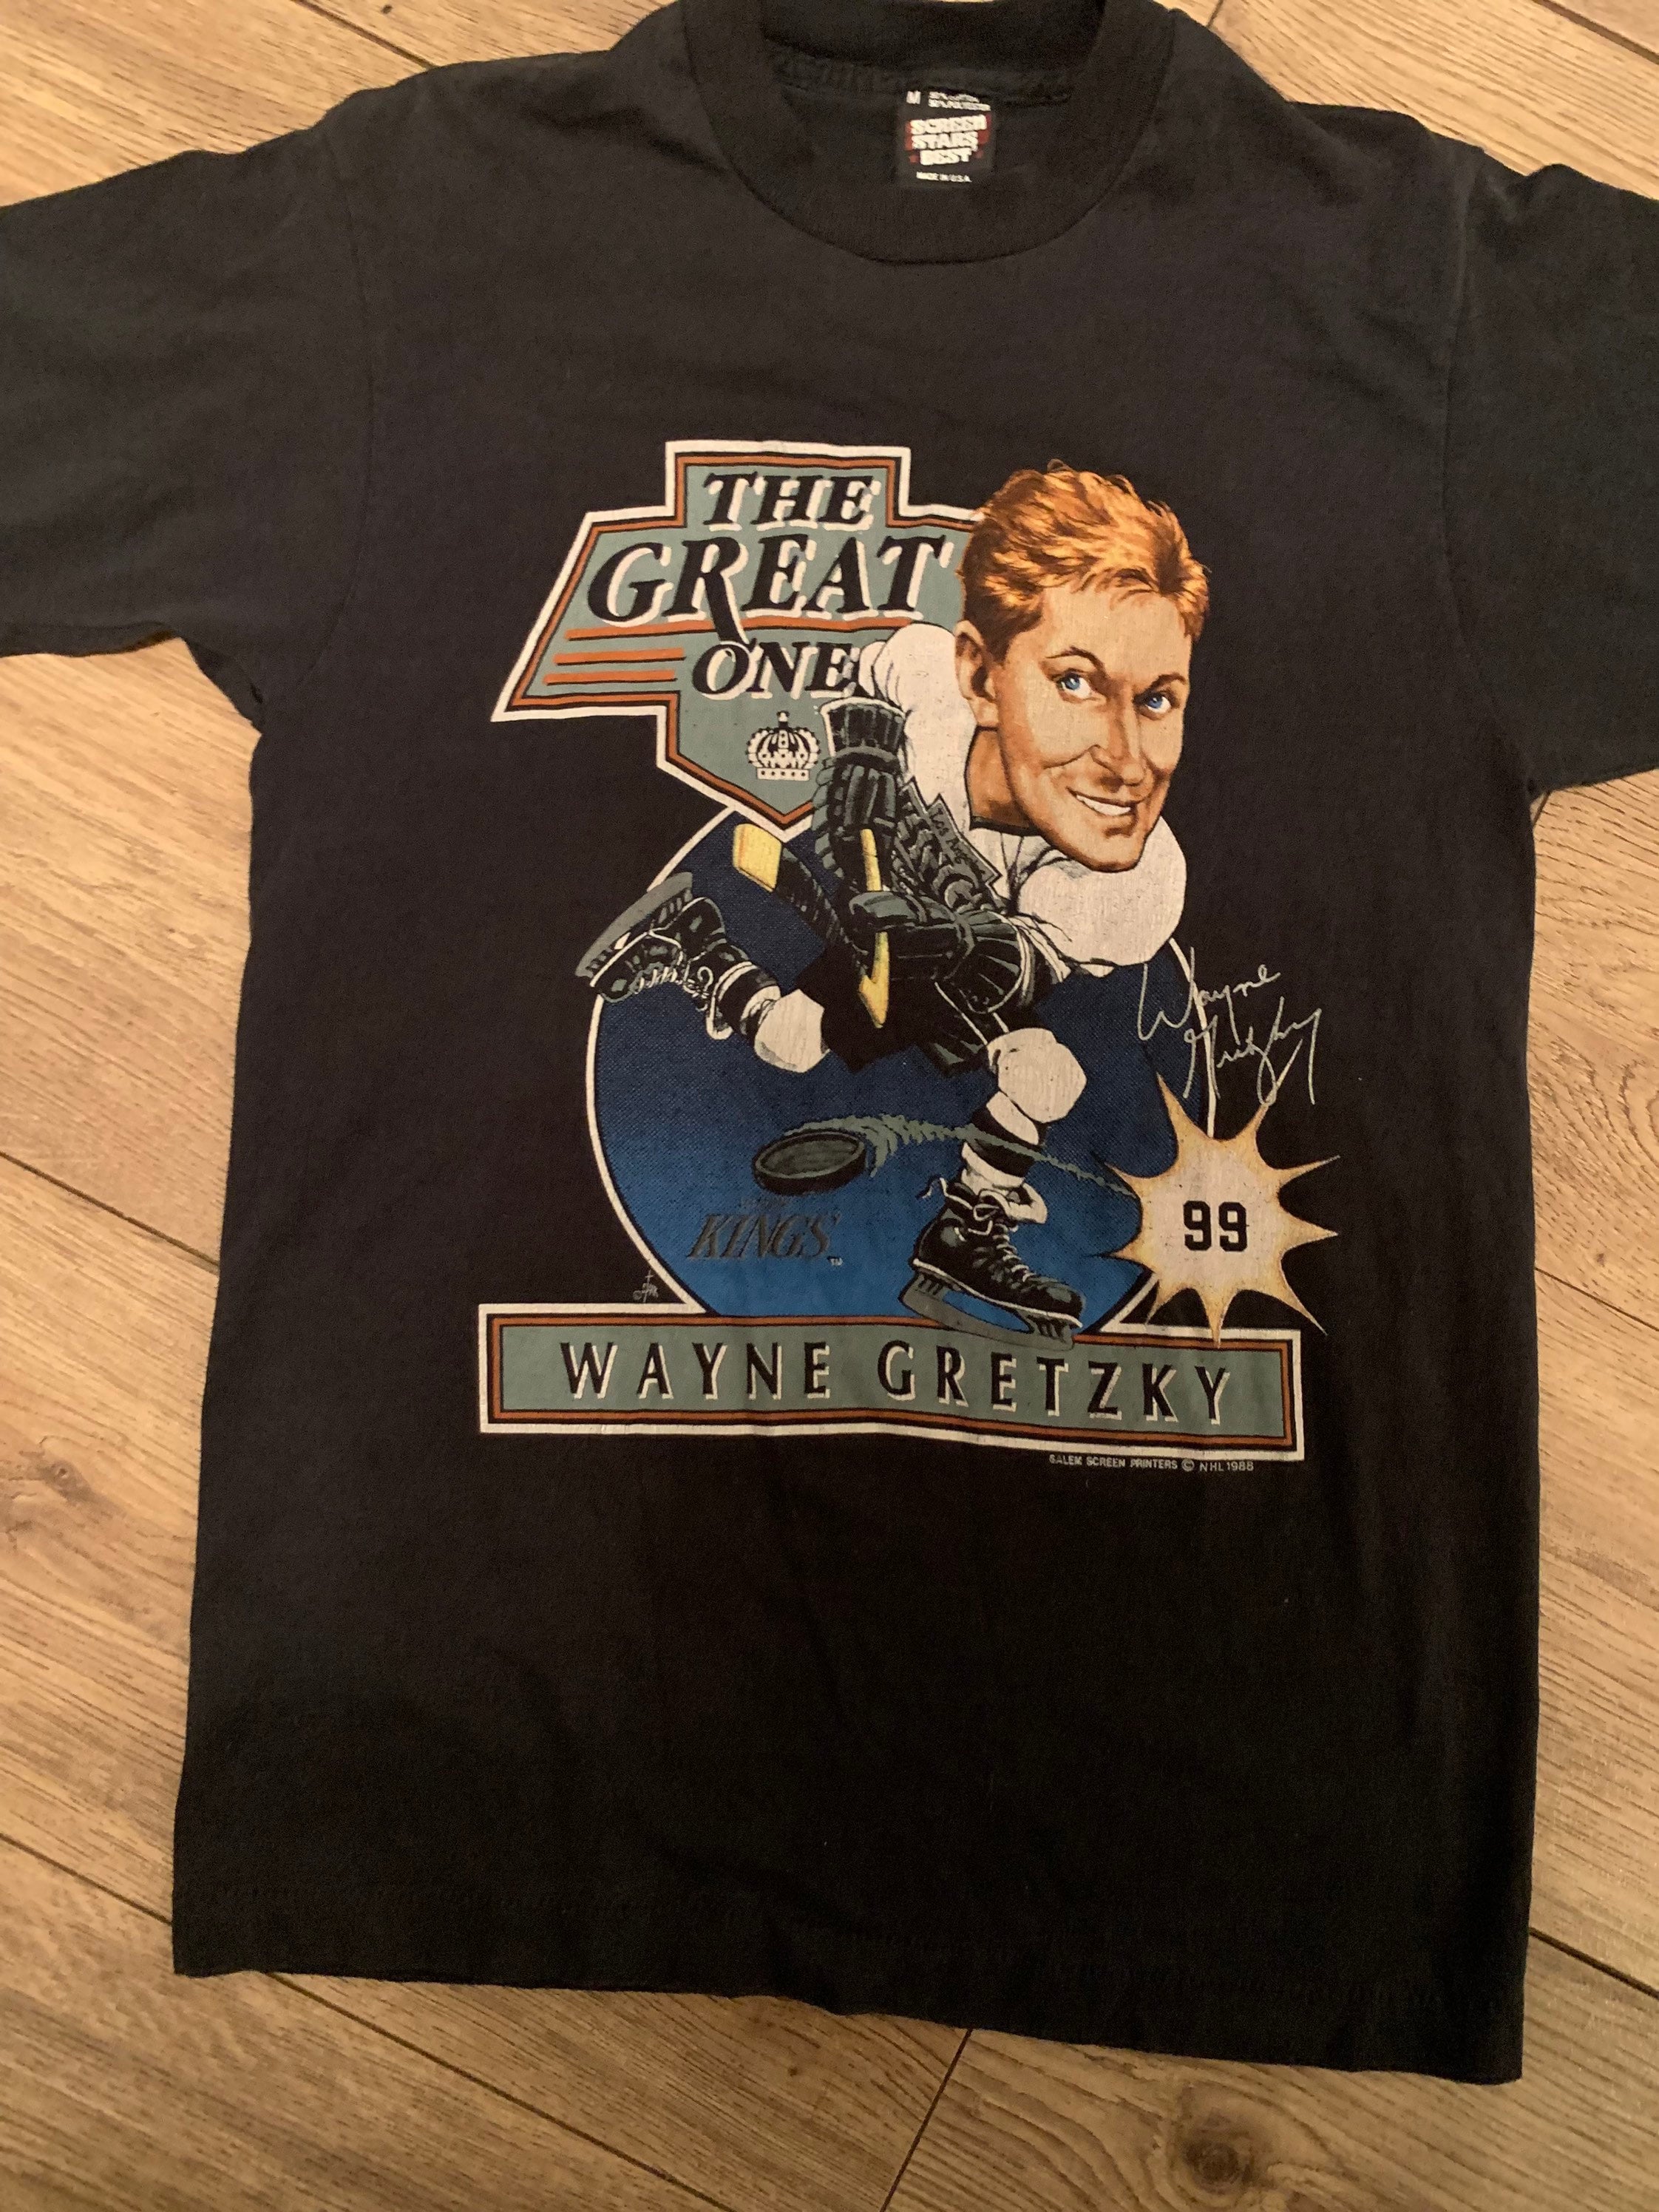  500 LEVEL Wayne Gretzky Youth Shirt (Kids Shirt, 6-7Y Small,  Tri Gray) - Wayne Gretzky 99 WHT: Clothing, Shoes & Jewelry